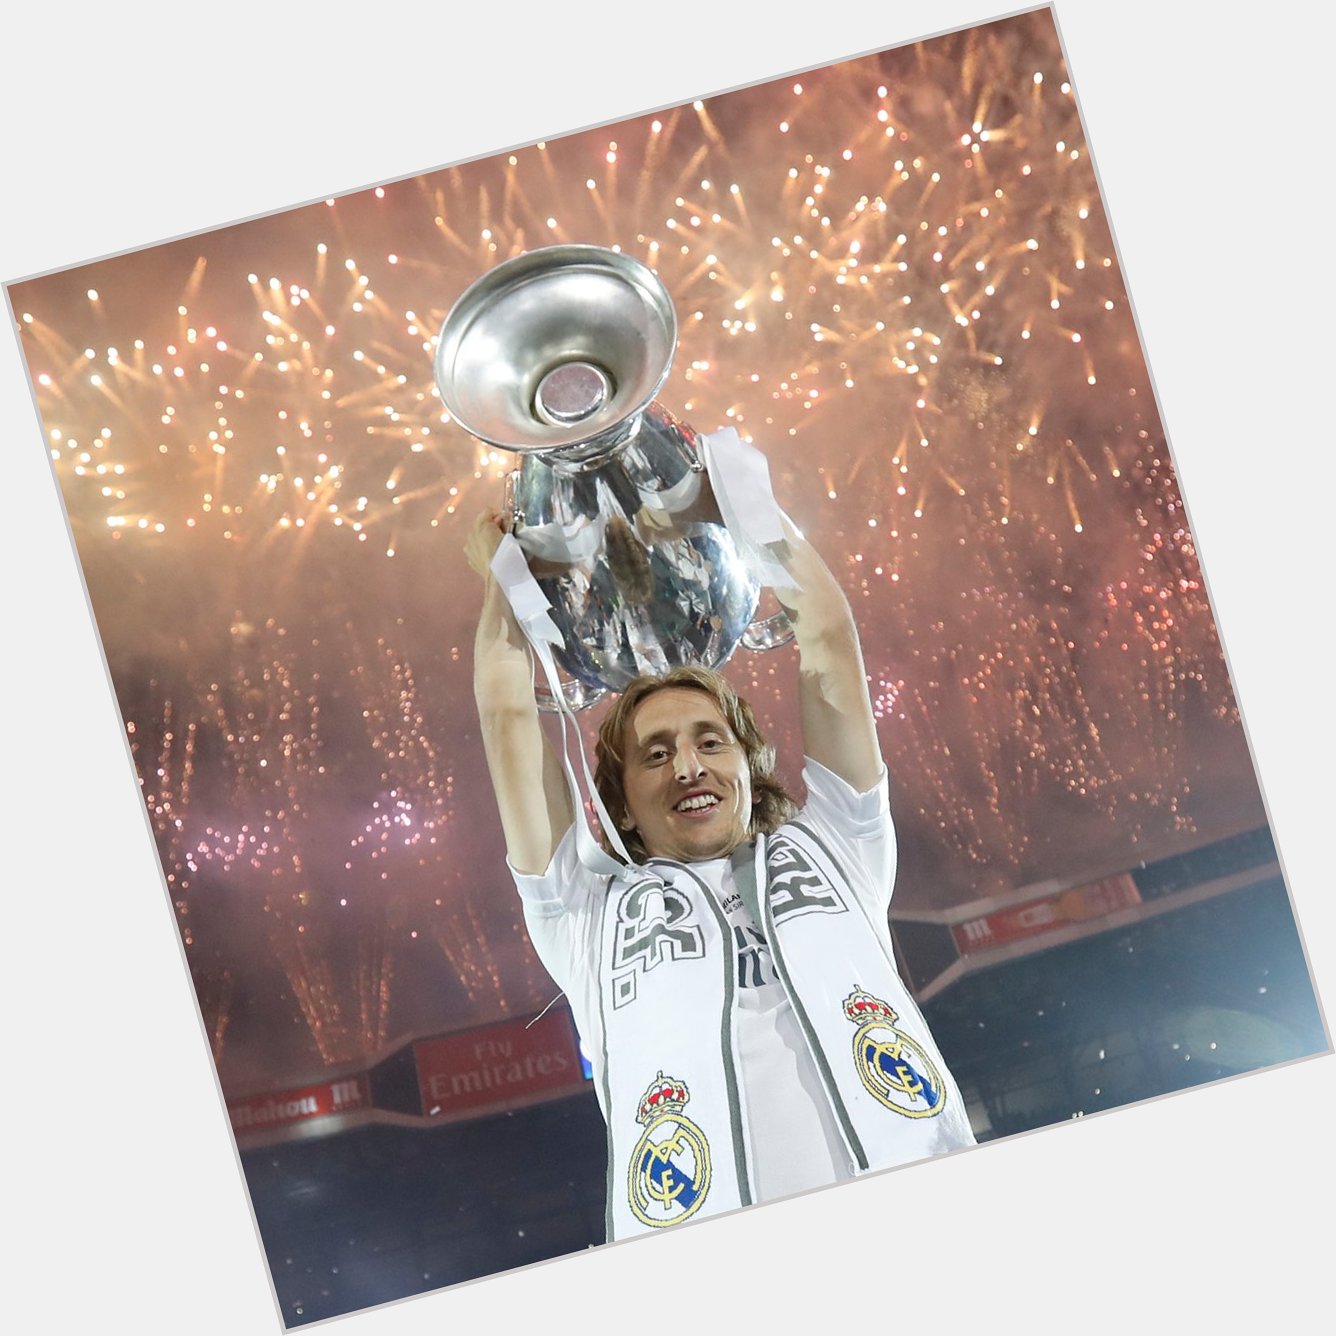 4x Champions League 1x Ballon d\Or 2x La Liga Happy 36th birthday to Luka Modric  